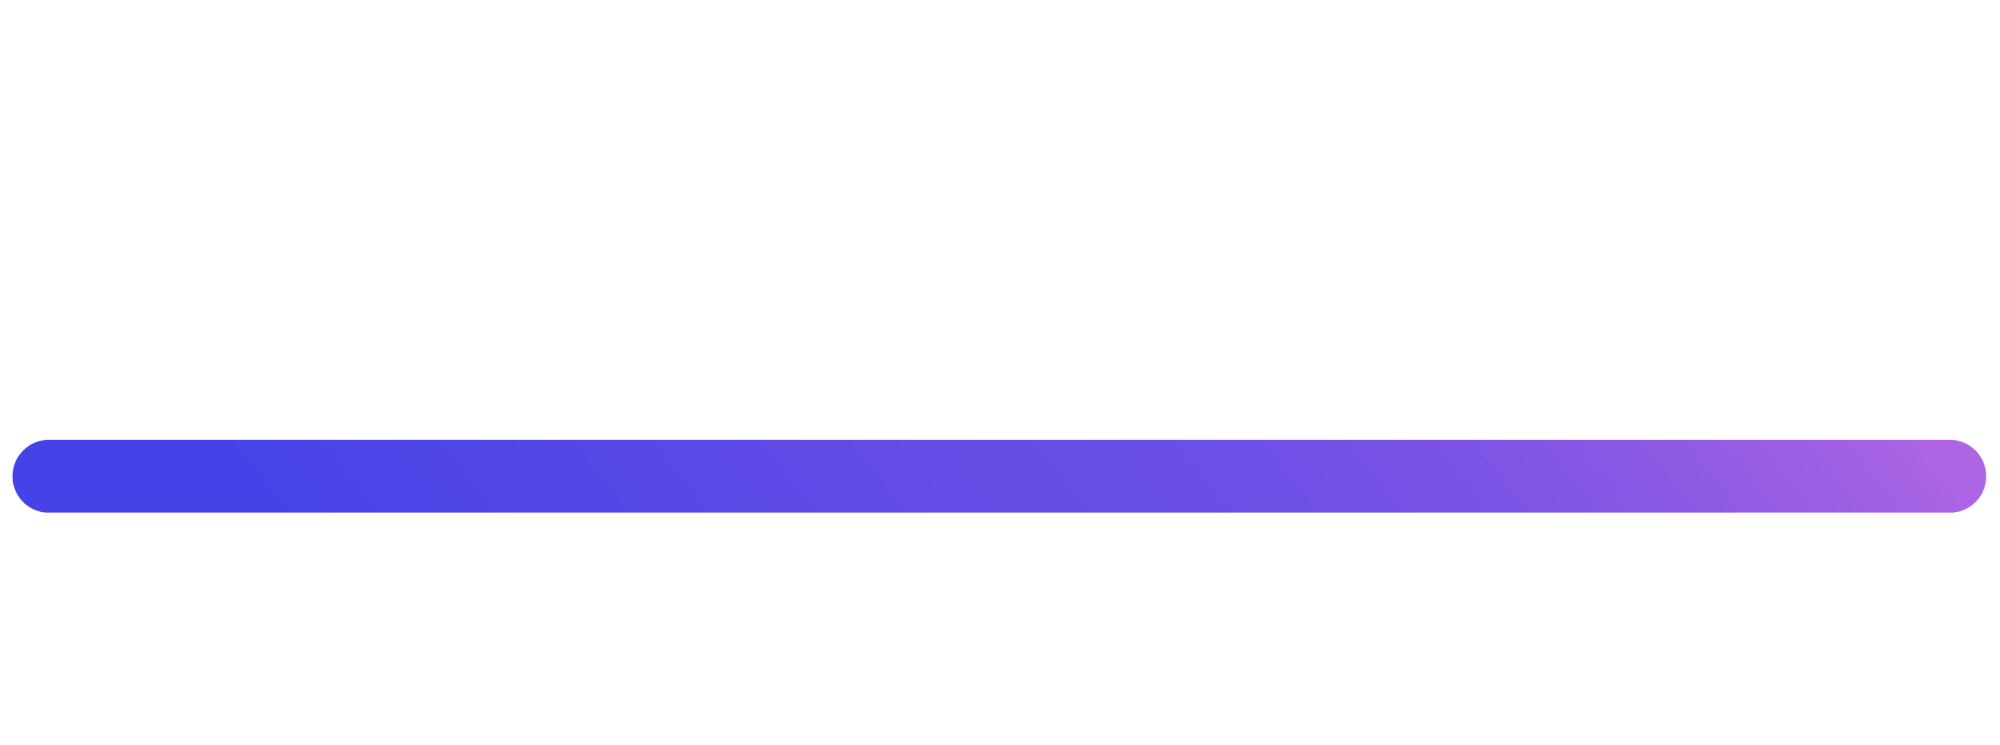 WeTrack-momentus-logo-reversed